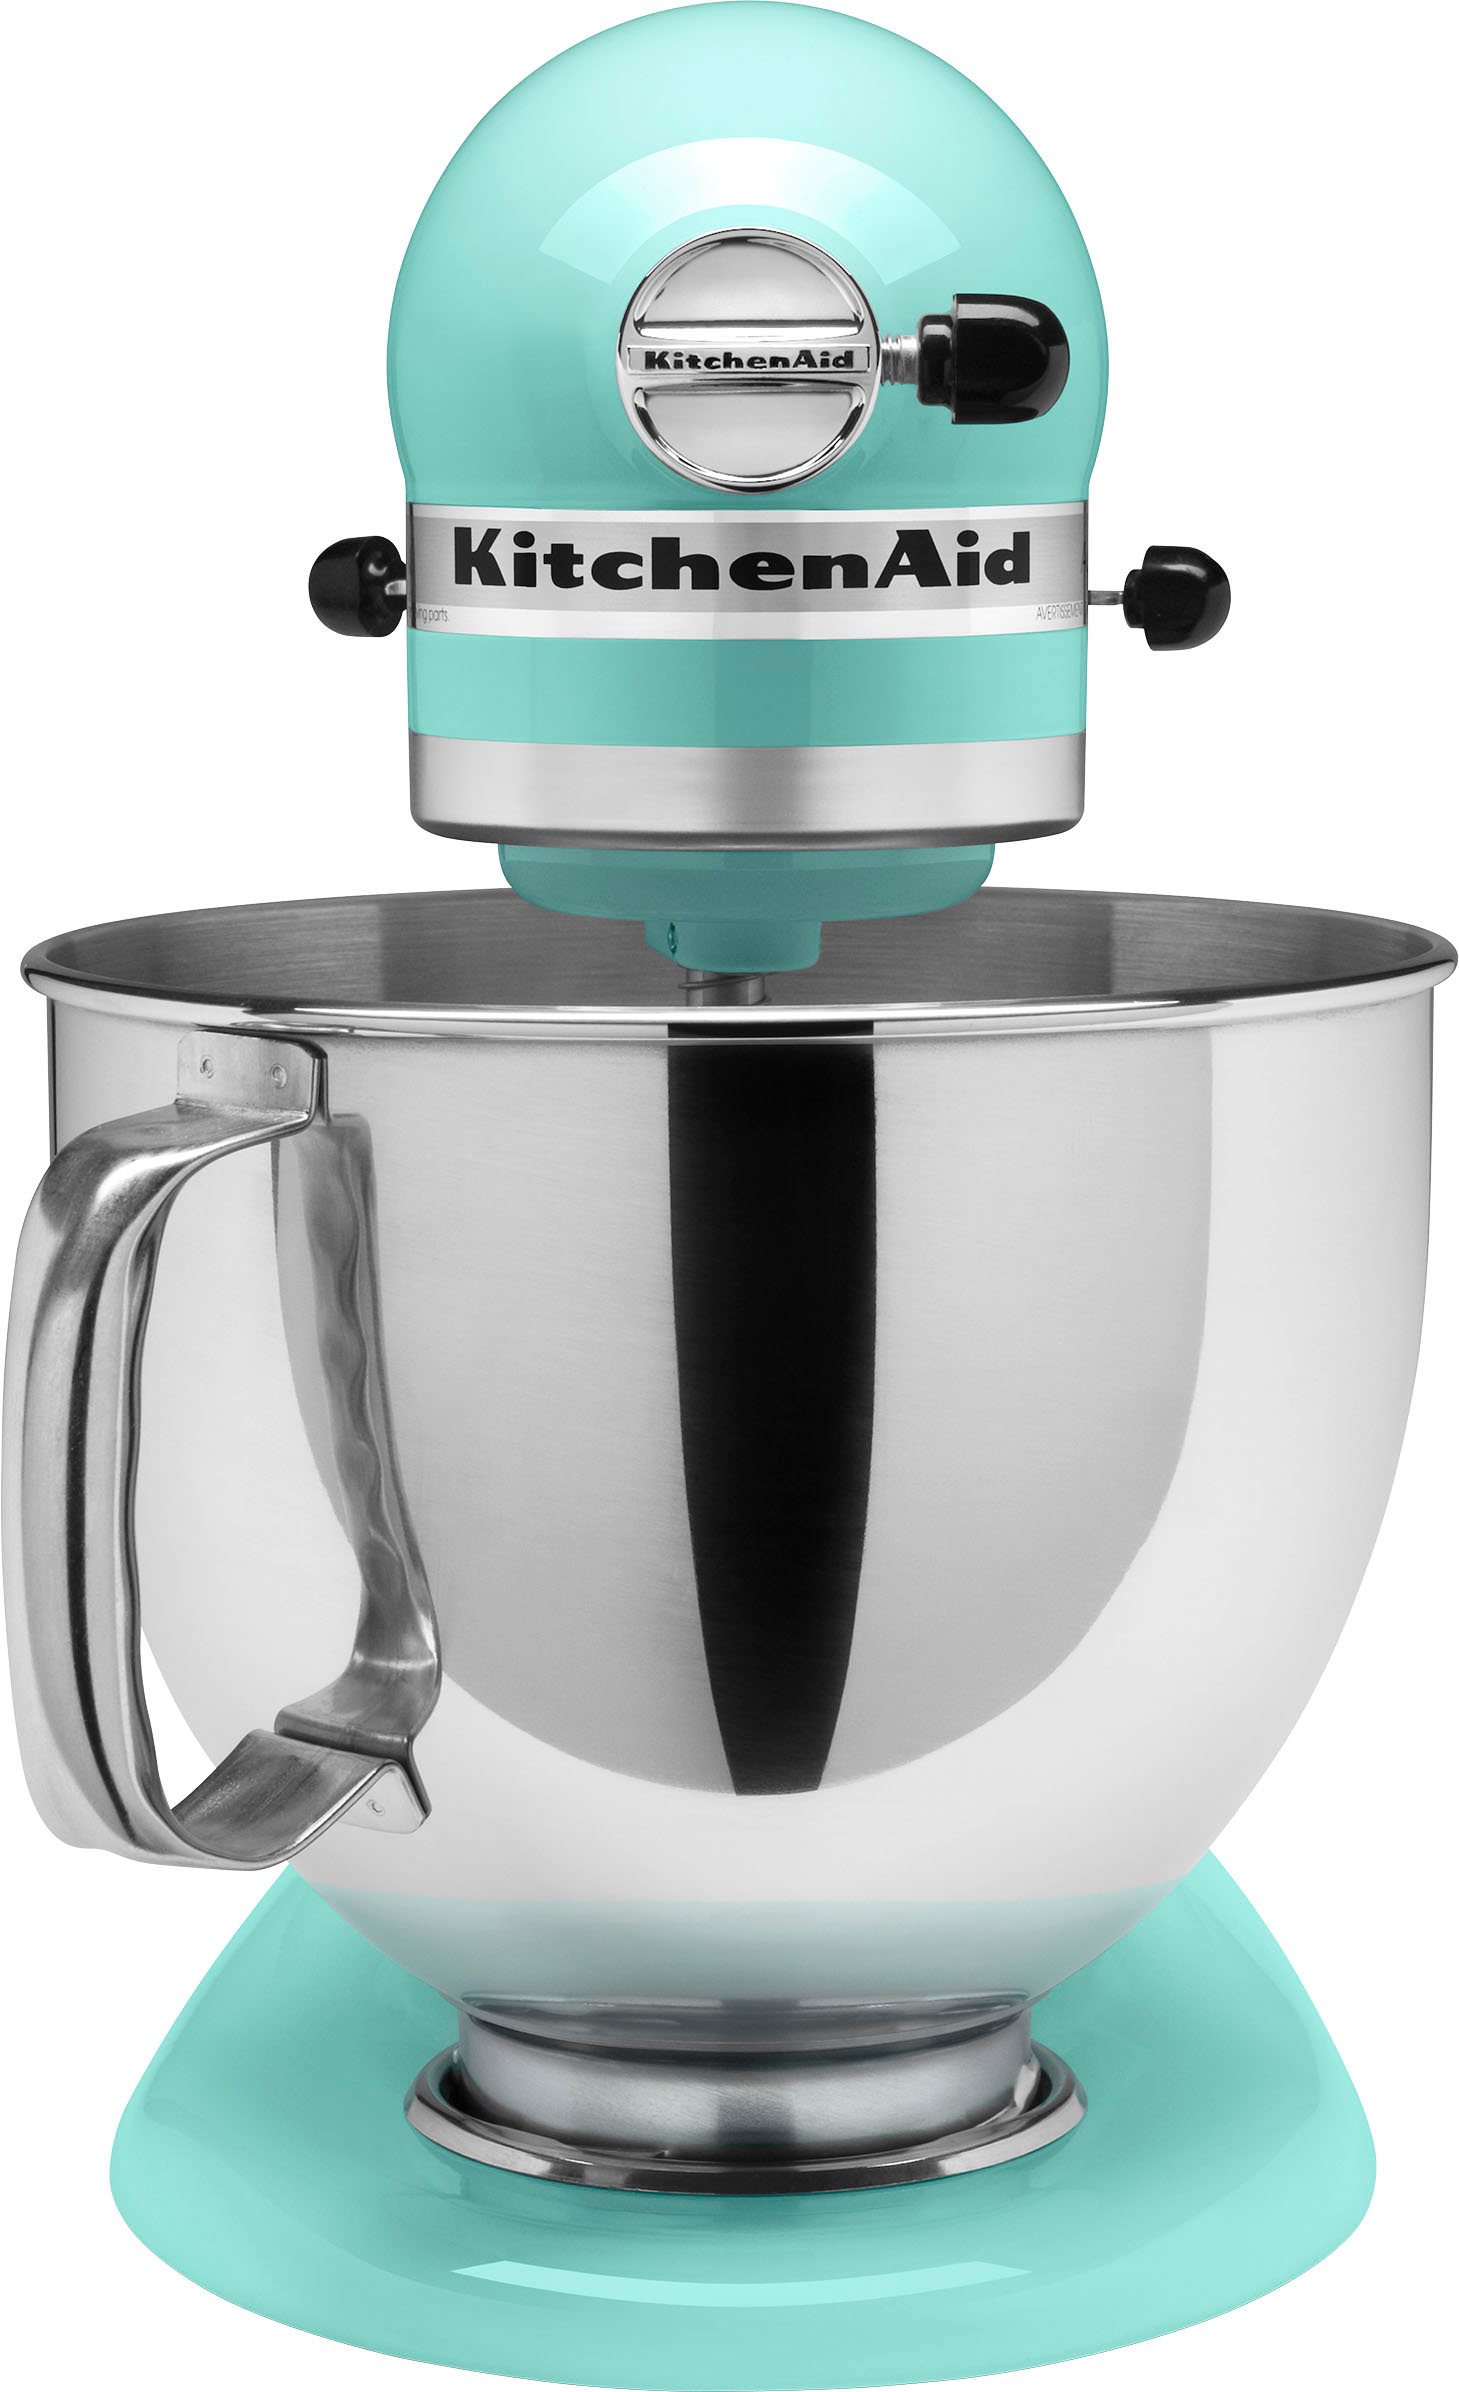 KitchenAid Artisan 5 Qt Stand Mixer Matte Grey KSM150PSFG - Best Buy